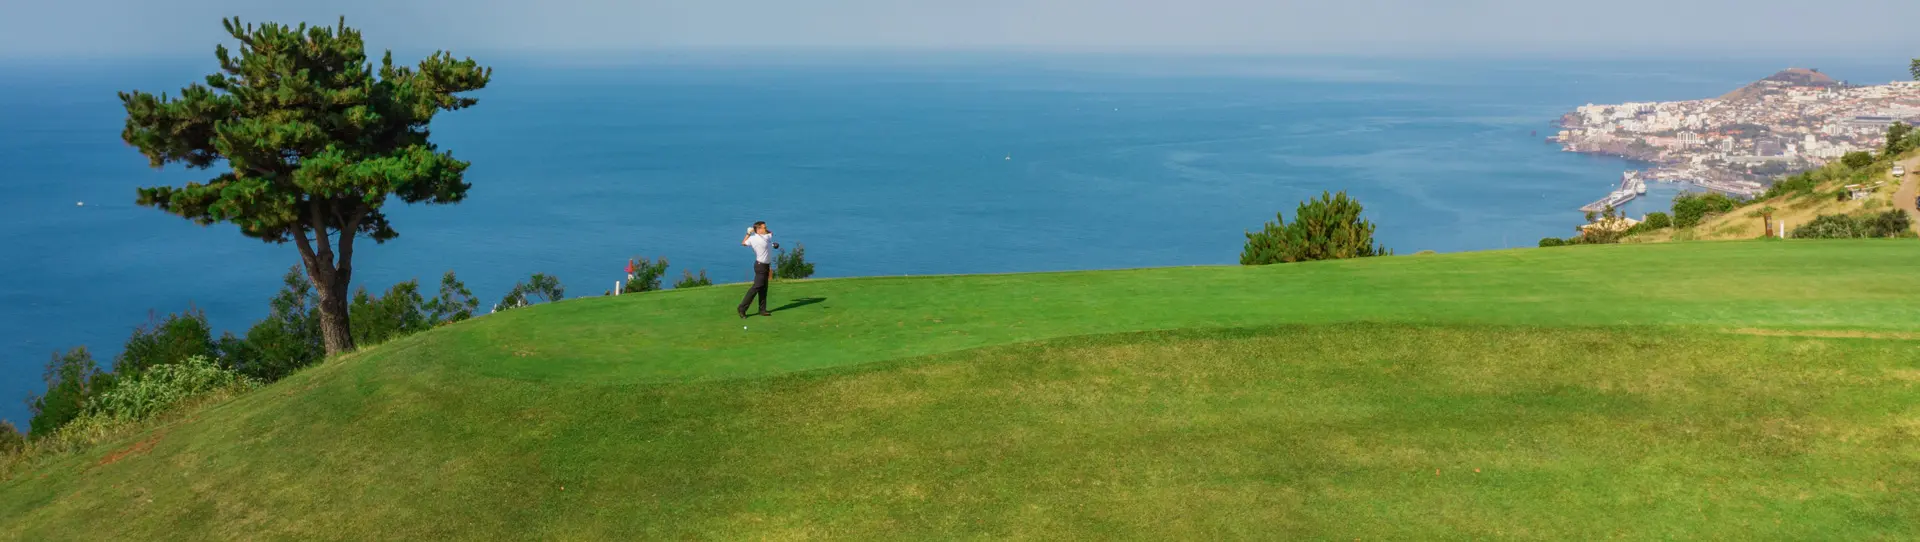 Portugal golf holidays - Madeira Golf Passport 3 Rounds - Photo 3